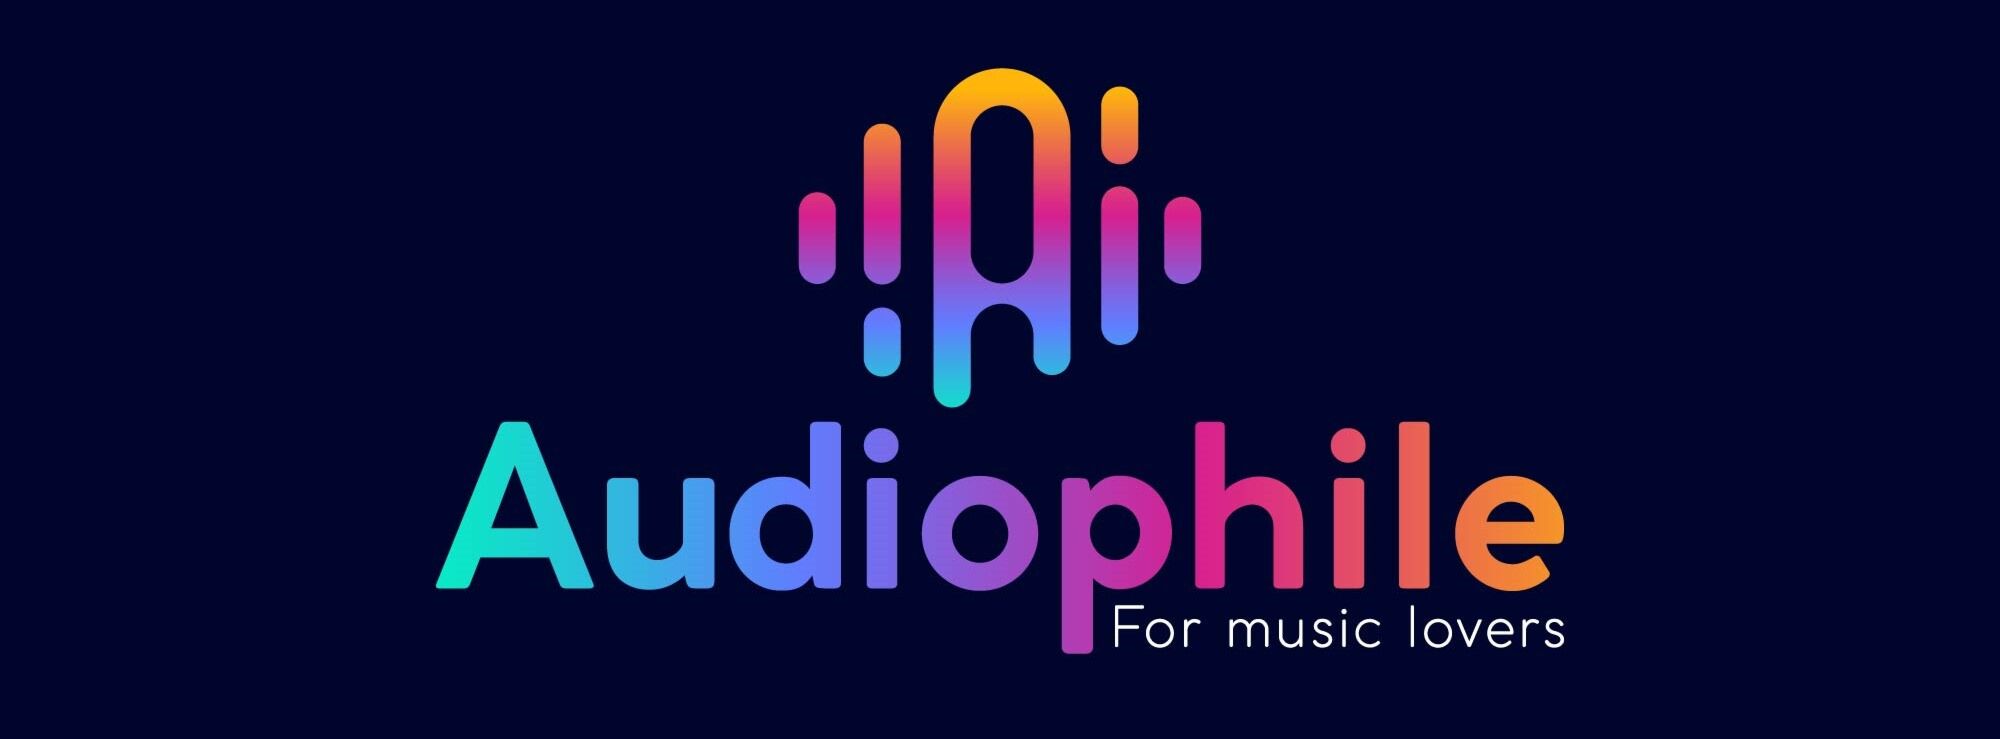 Audiophile - Kvaliteten er hørbar!